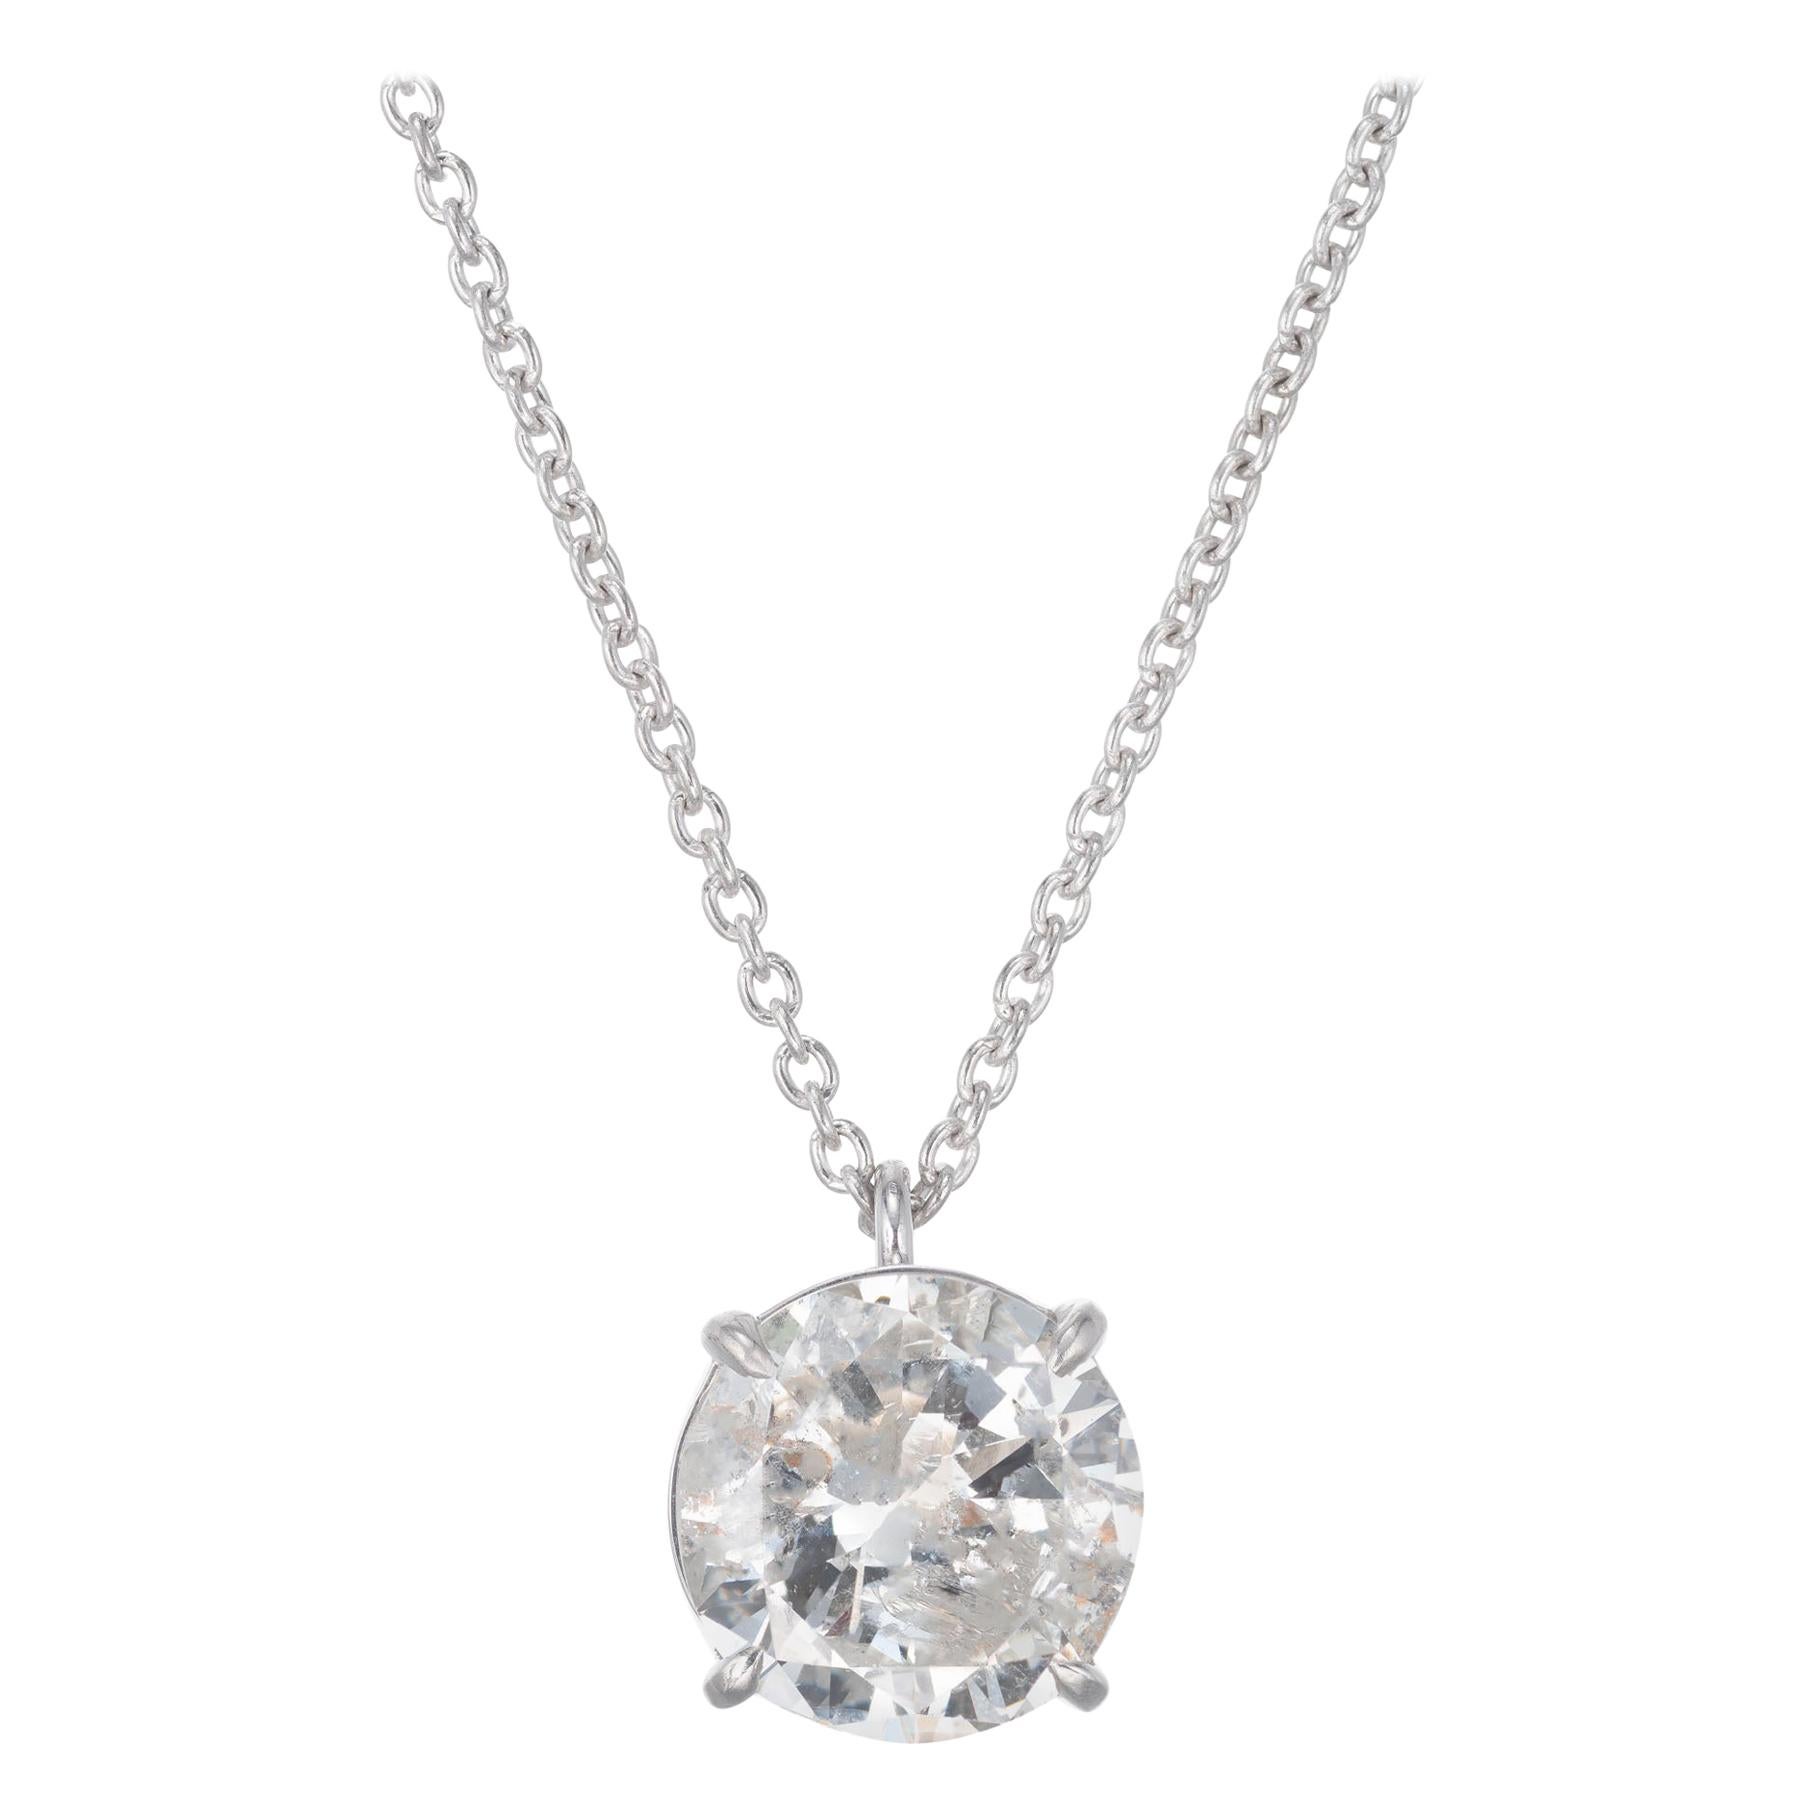 Peter Suchy EGL Certified 6.72 Carat Diamond Platinum Pendant Necklace